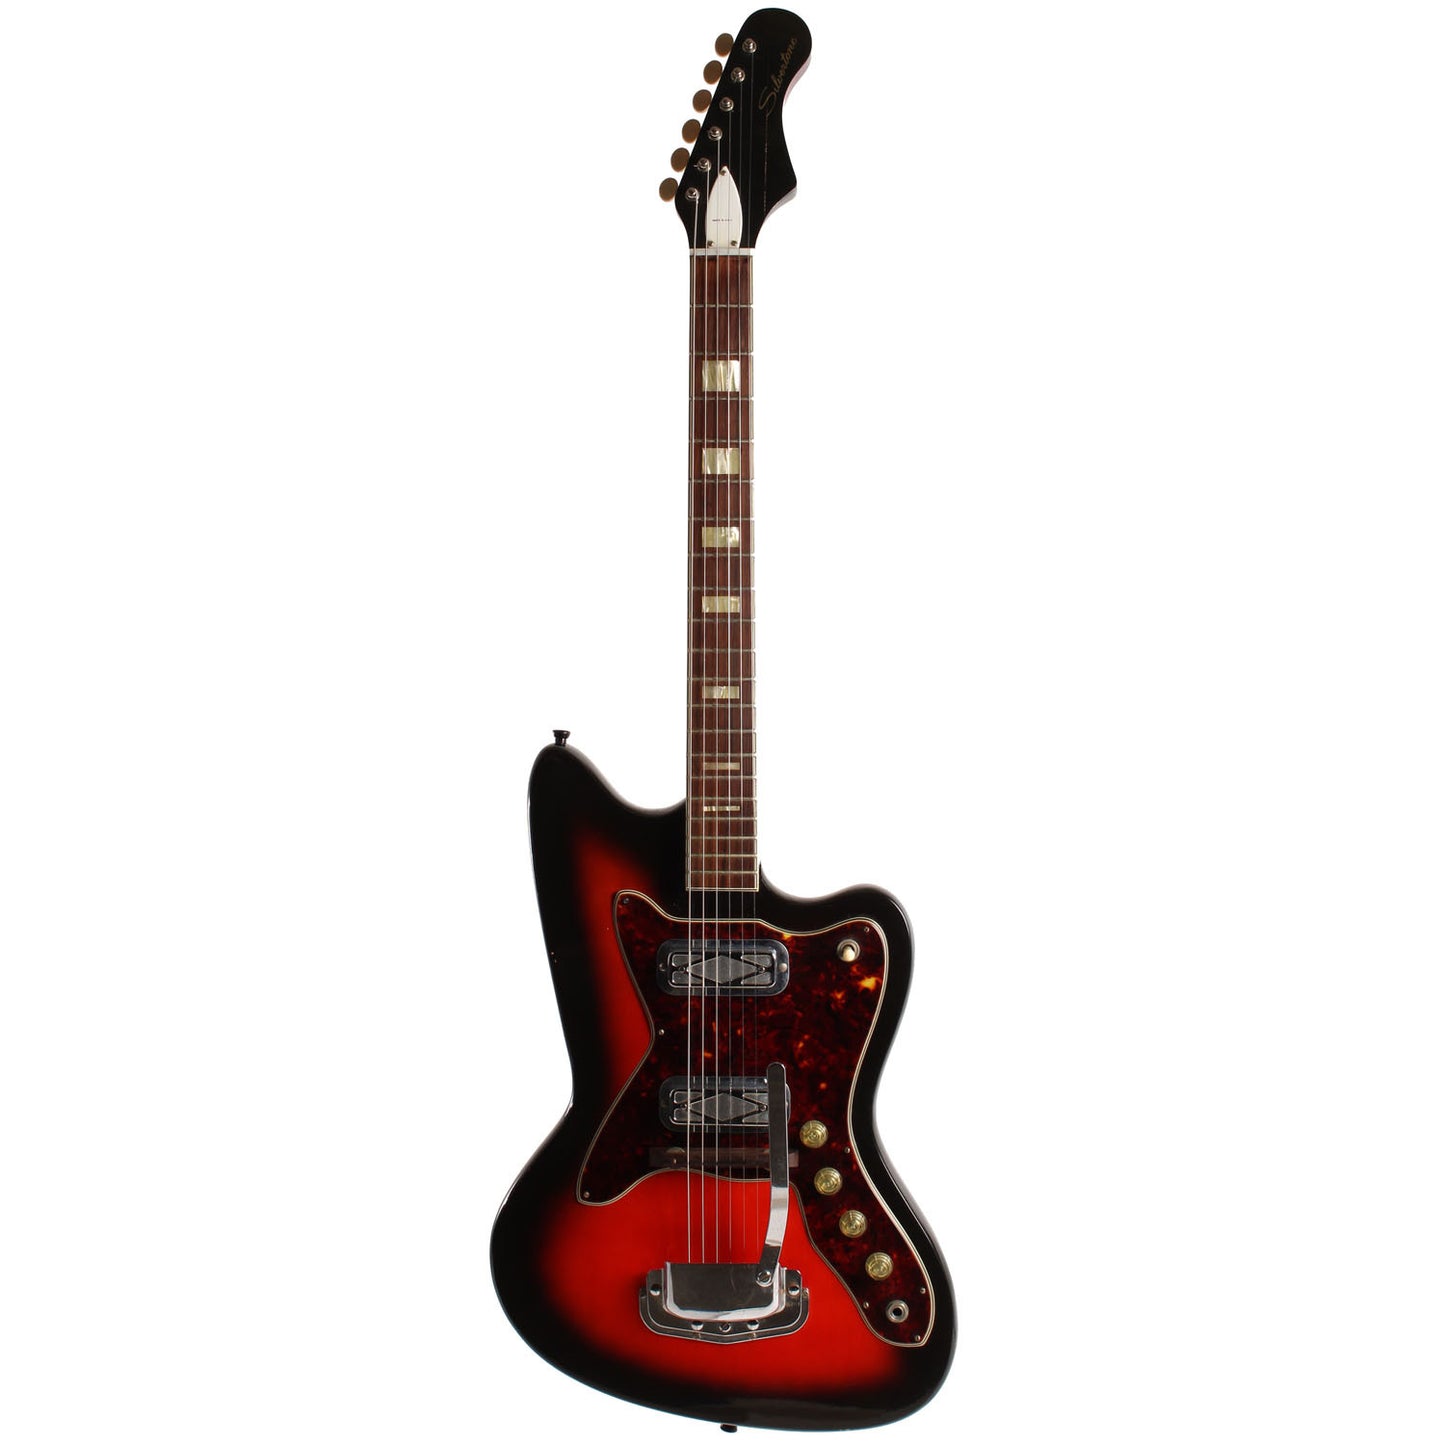 1965 Silvertone 1478 Silhouette - Garrett Park Guitars
 - 3